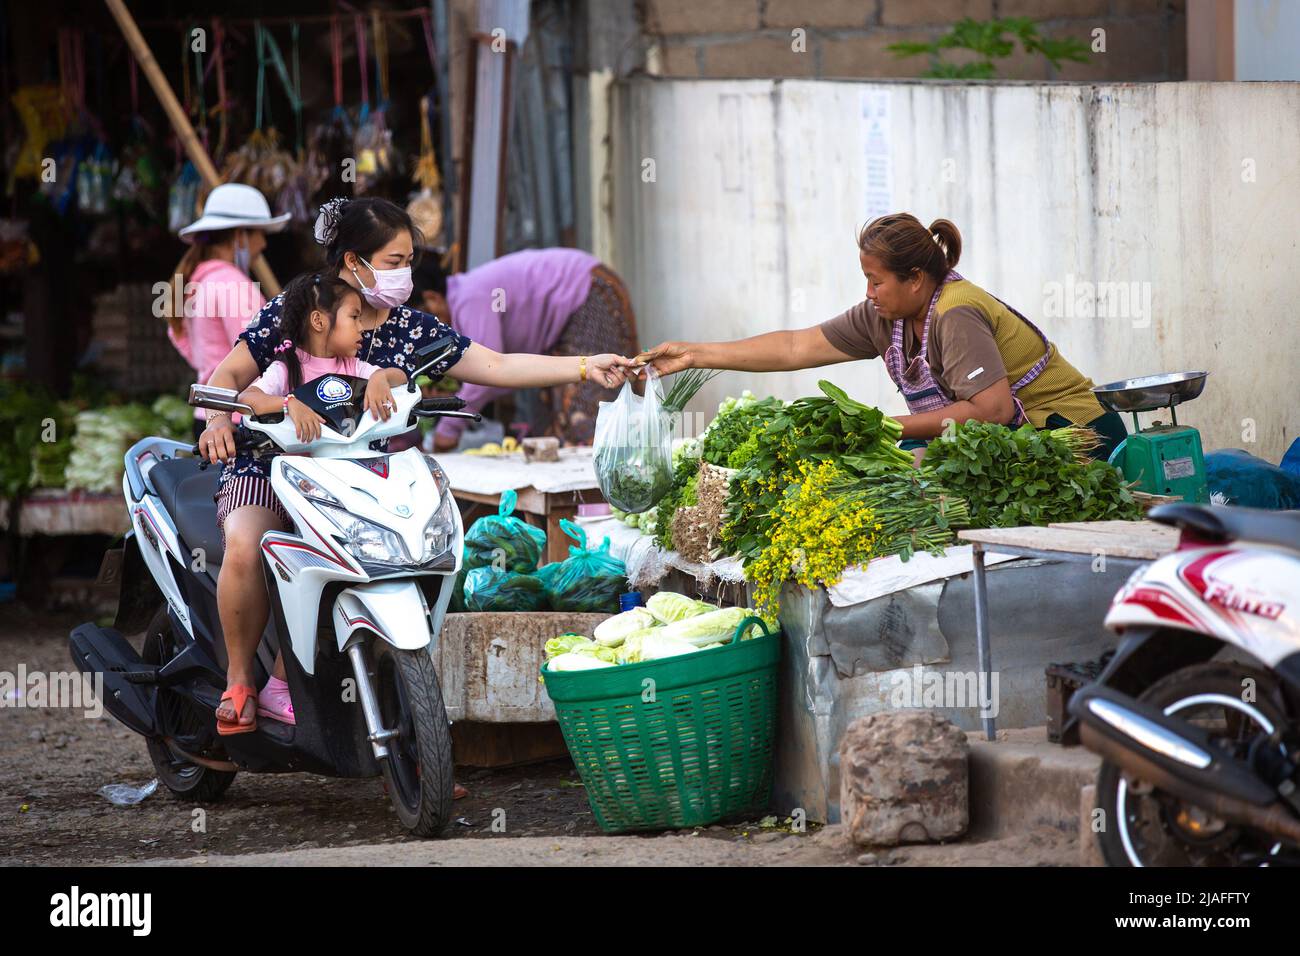 Luang Prabang, Laos - November 15, 2017: An unidentified woman wearing a face mask buying vegetables from a street seller in Luang Prabang, Laos. Stock Photo